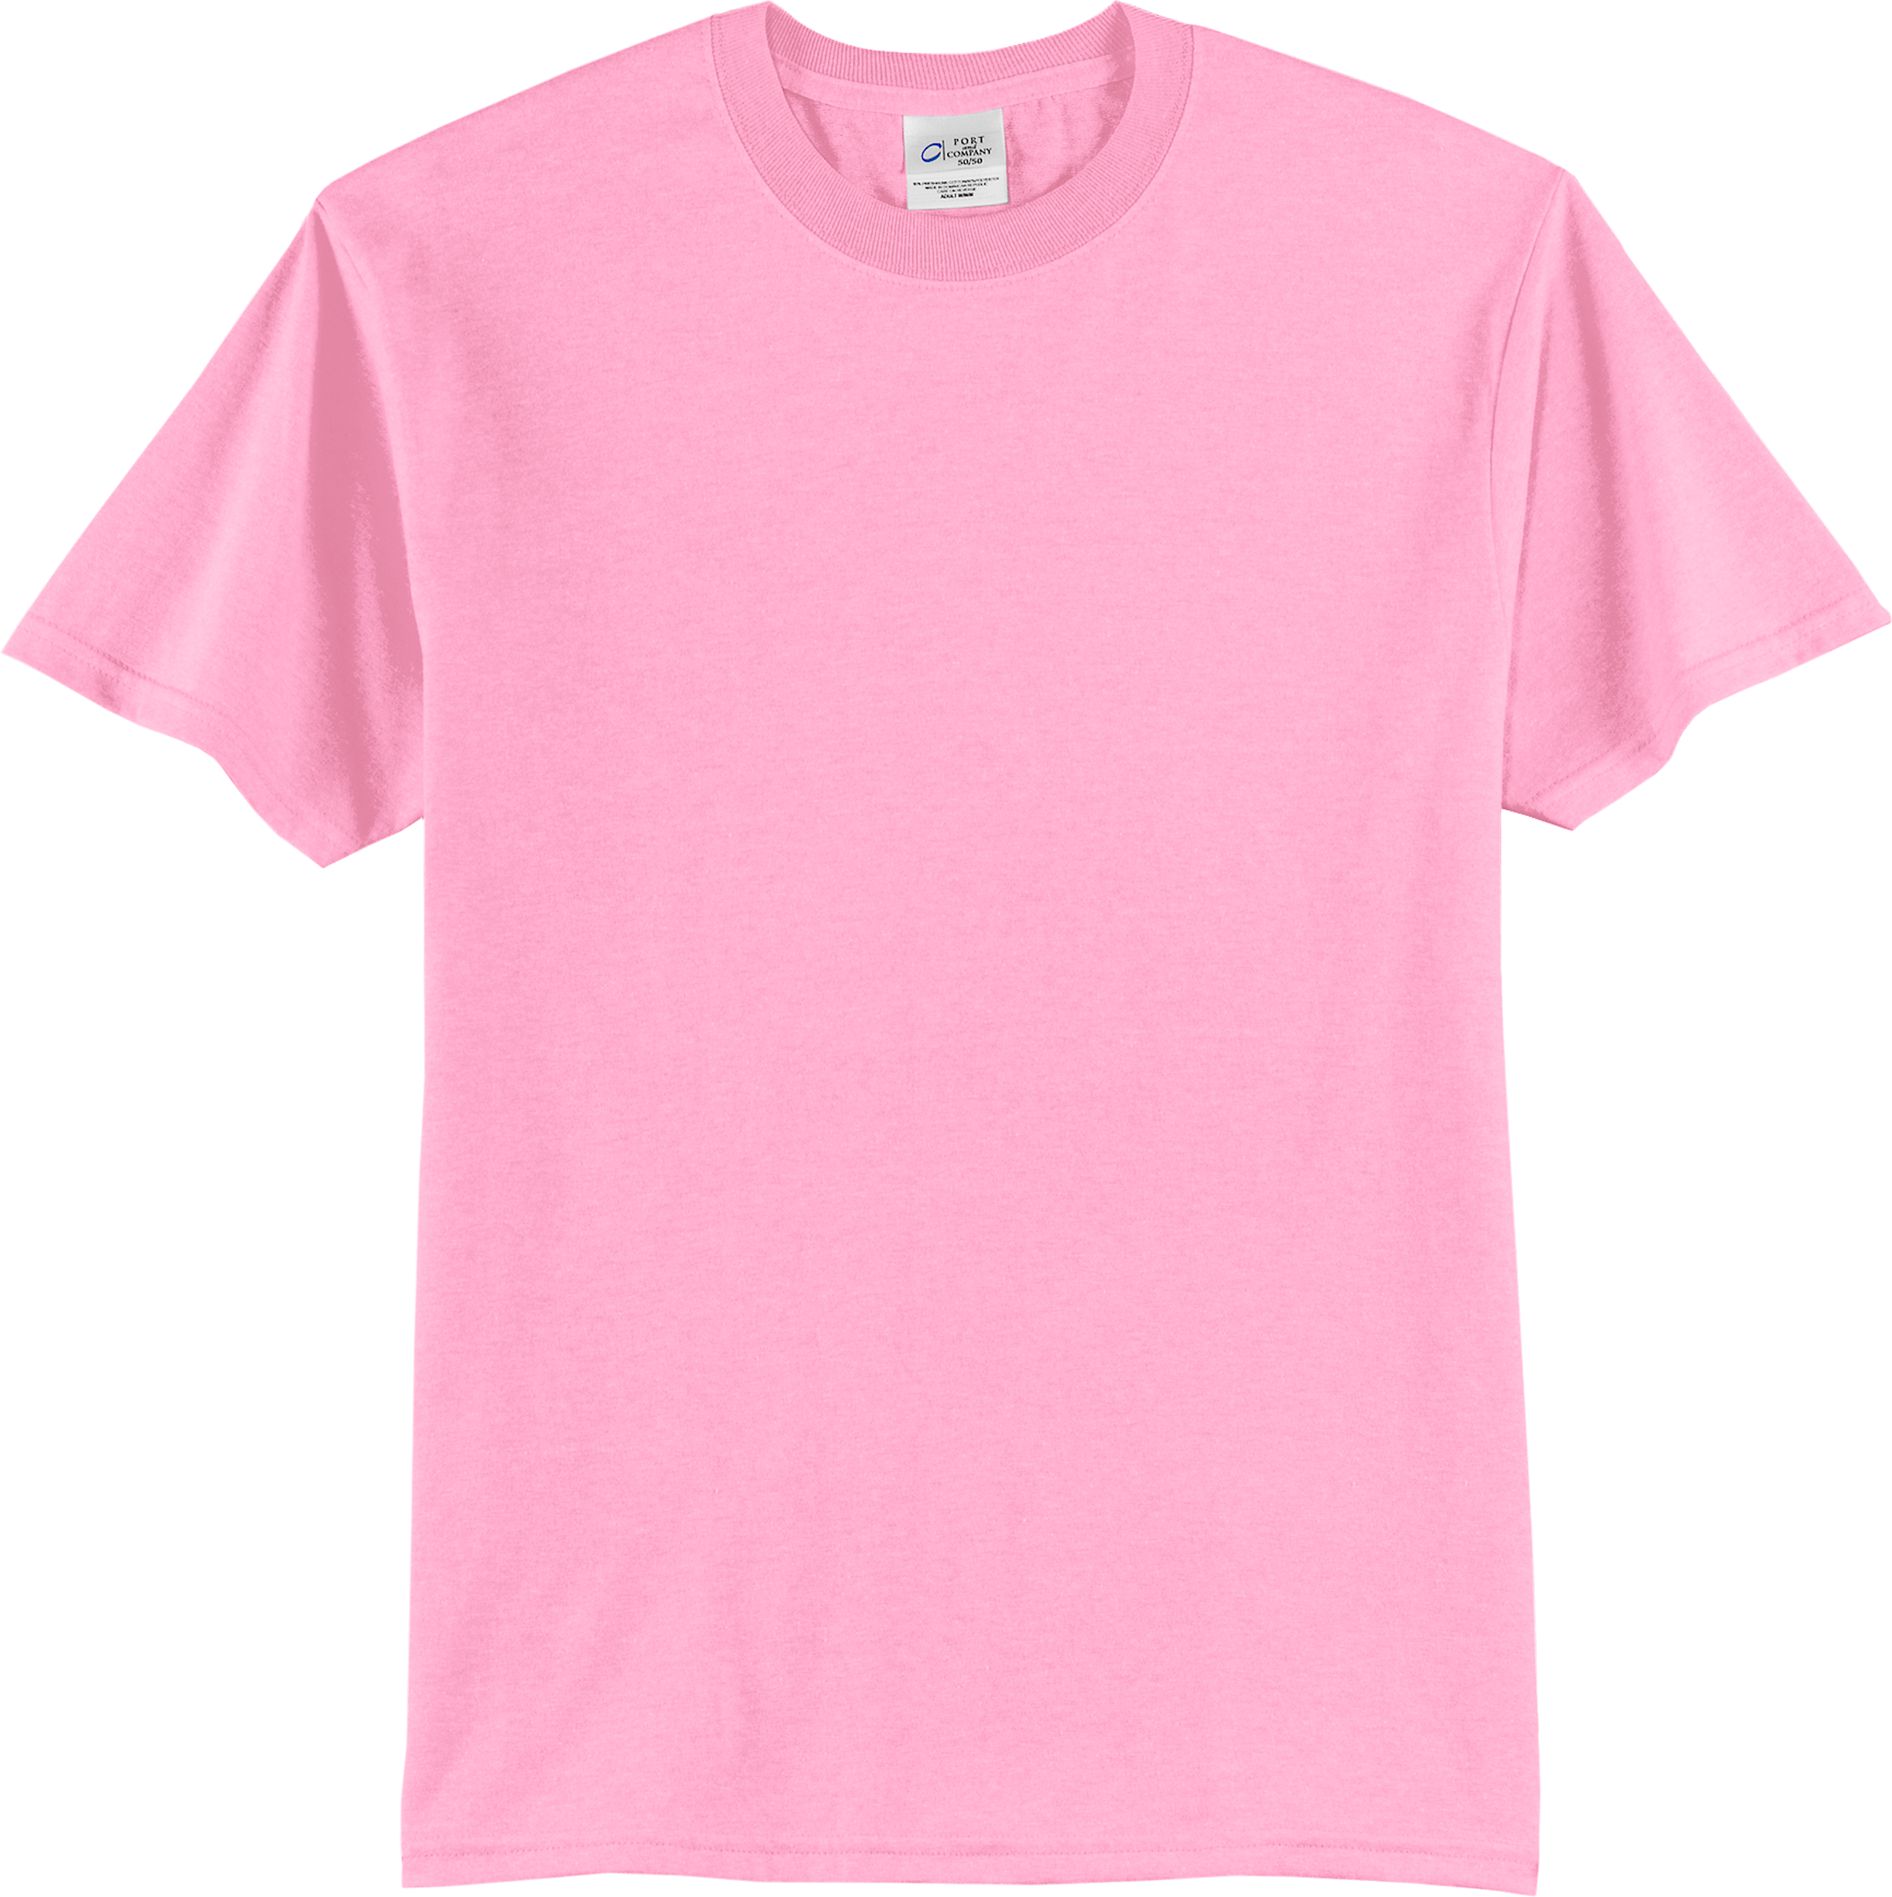 Candy Pink Blank T shirt Basic Tees Shop